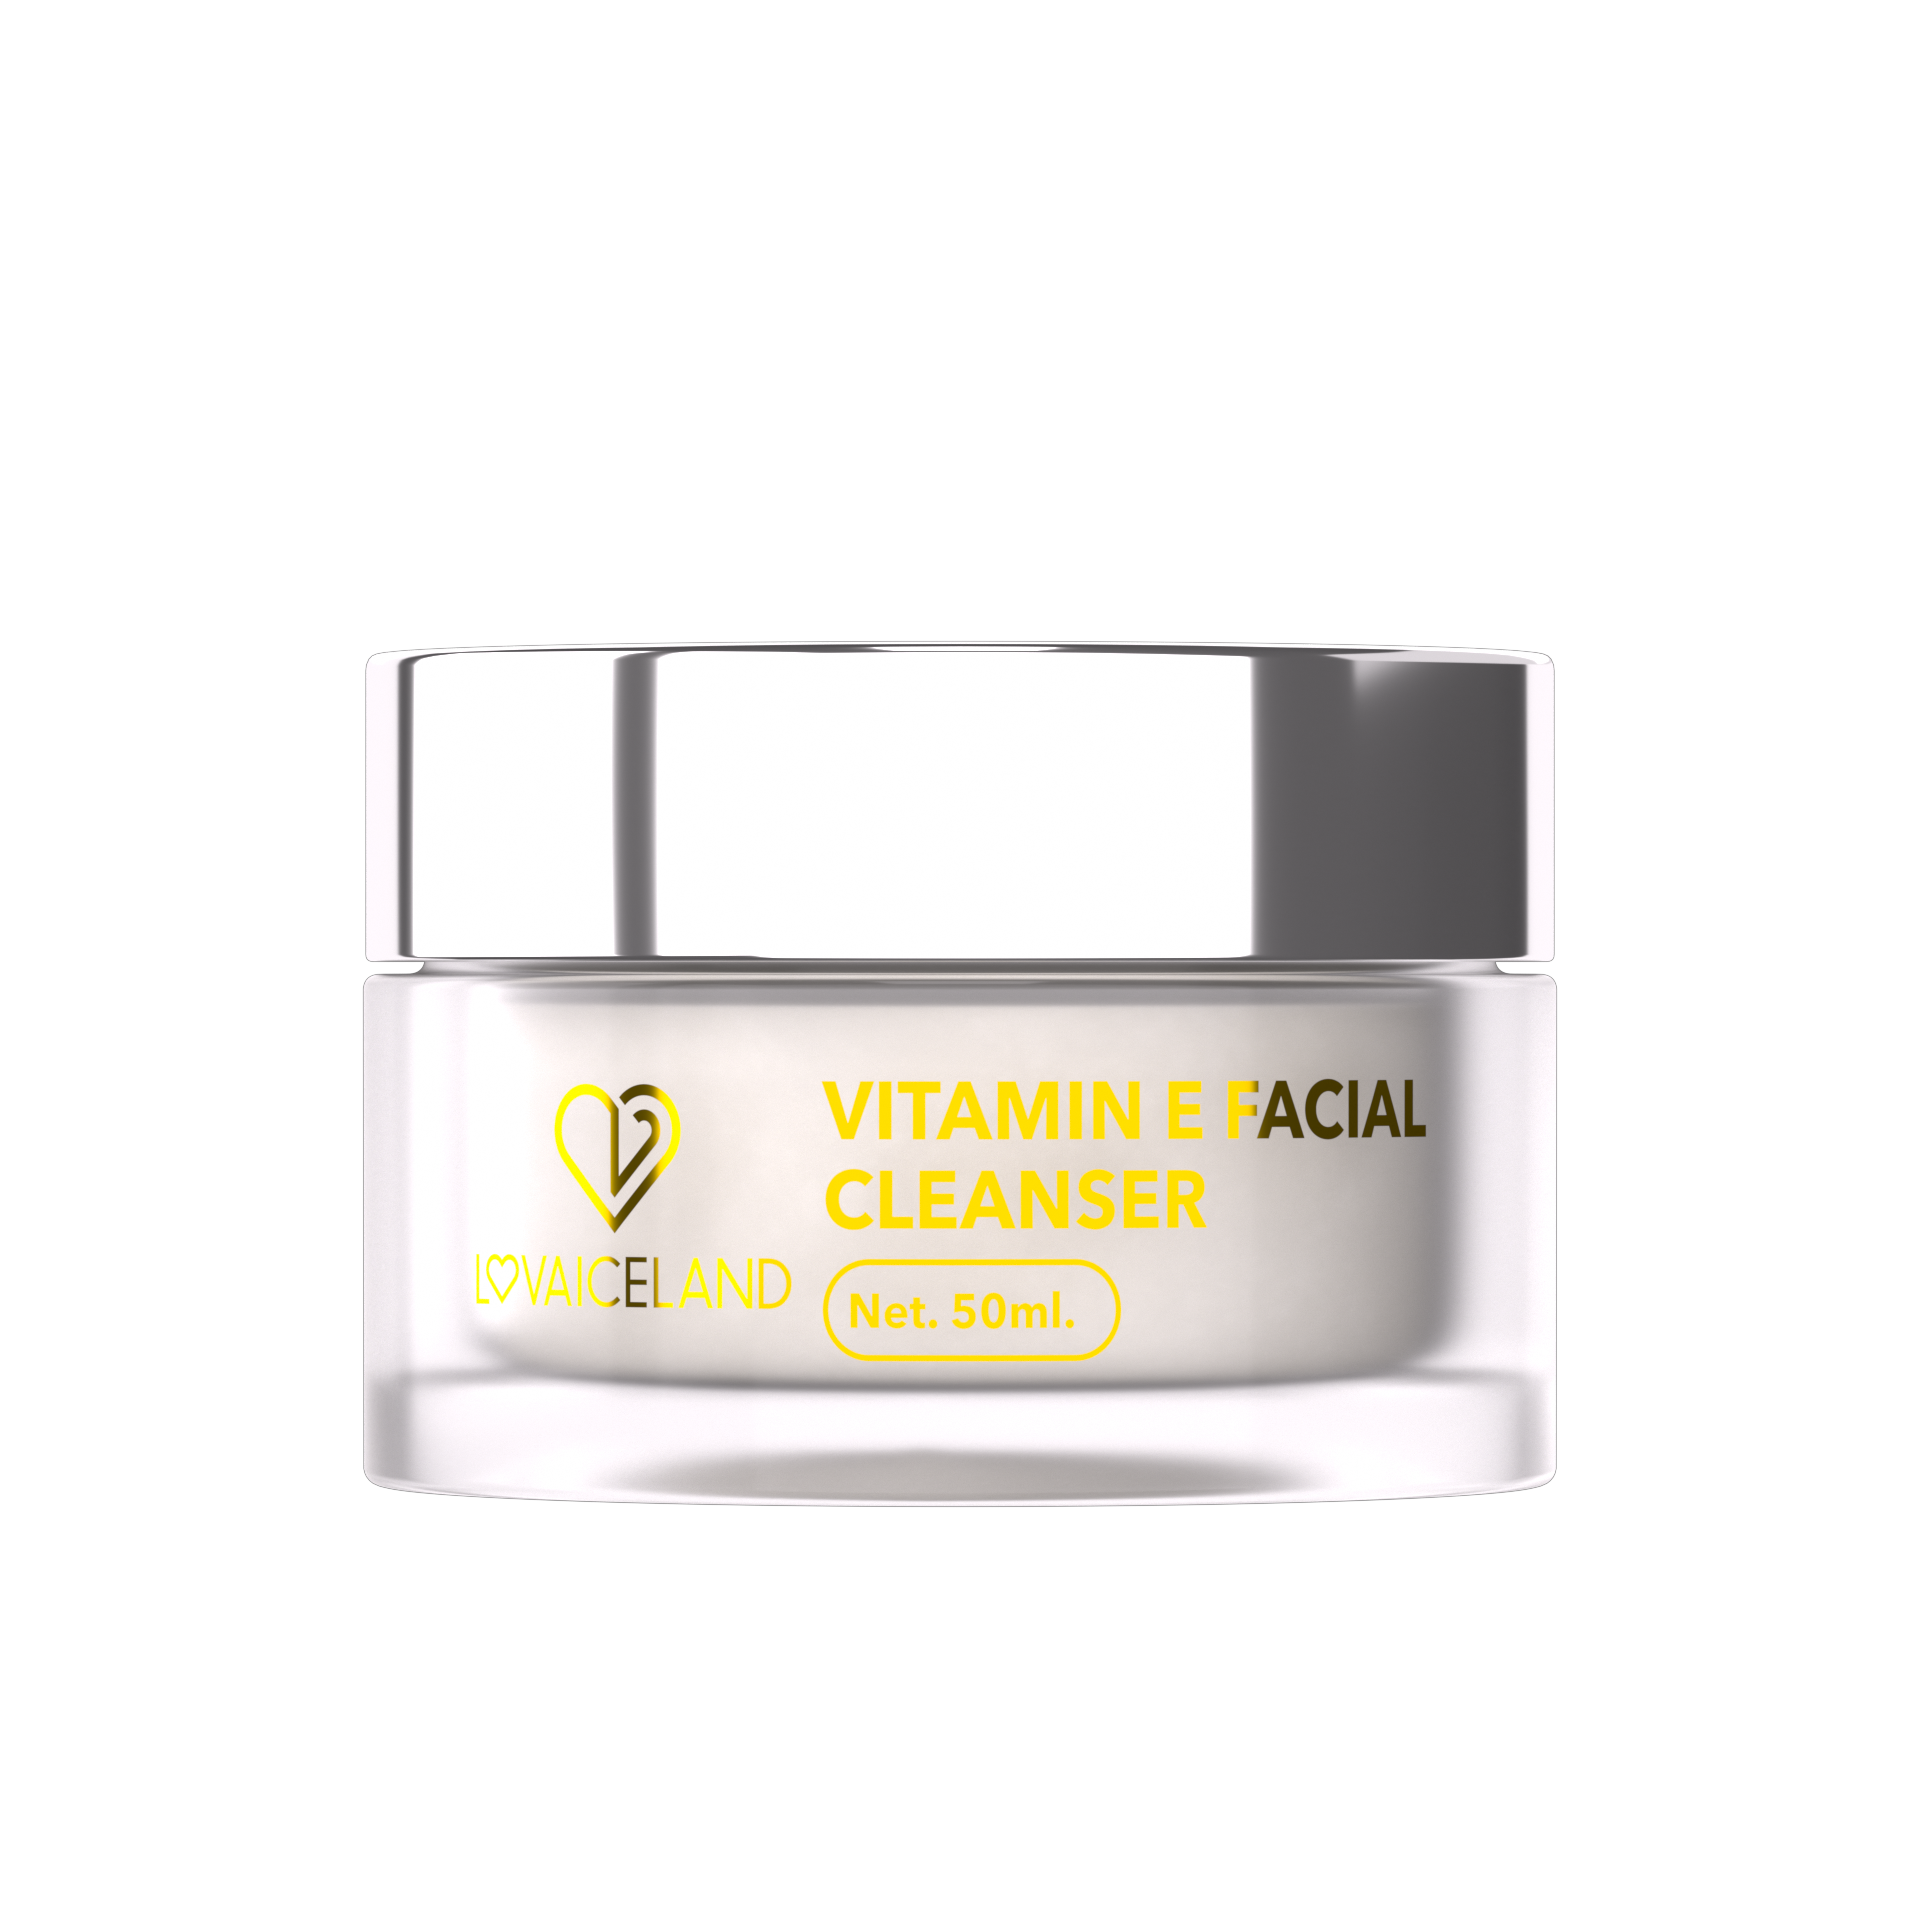 Vitamin E facial cleanser